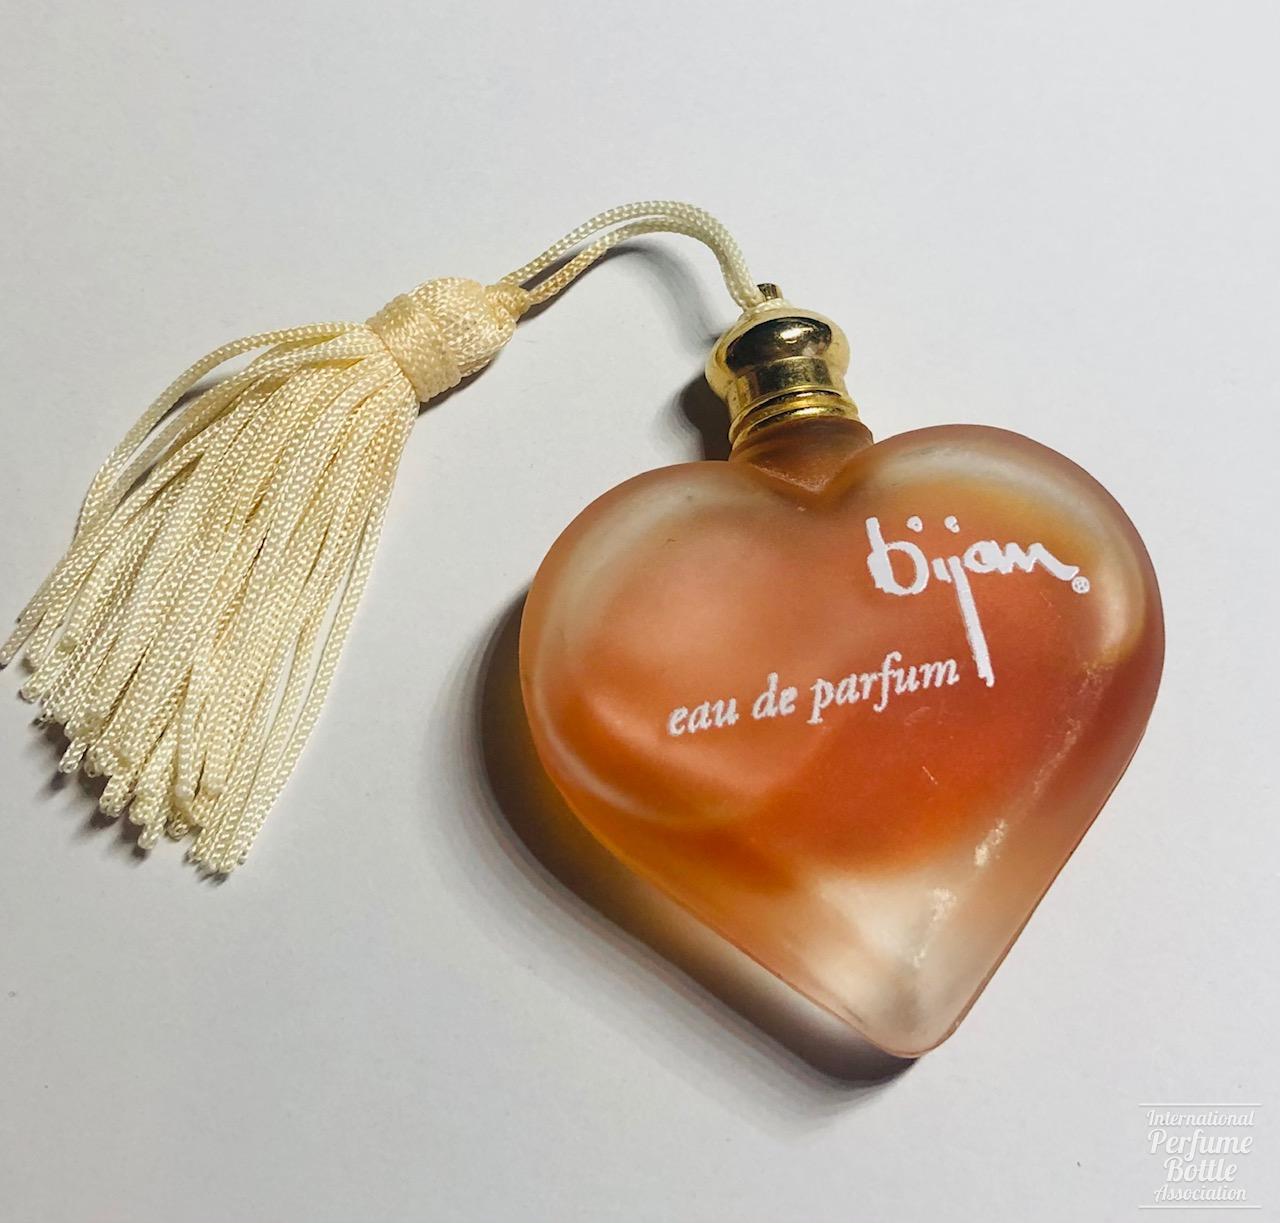 "Bijan eau de Parfum" by Bijan